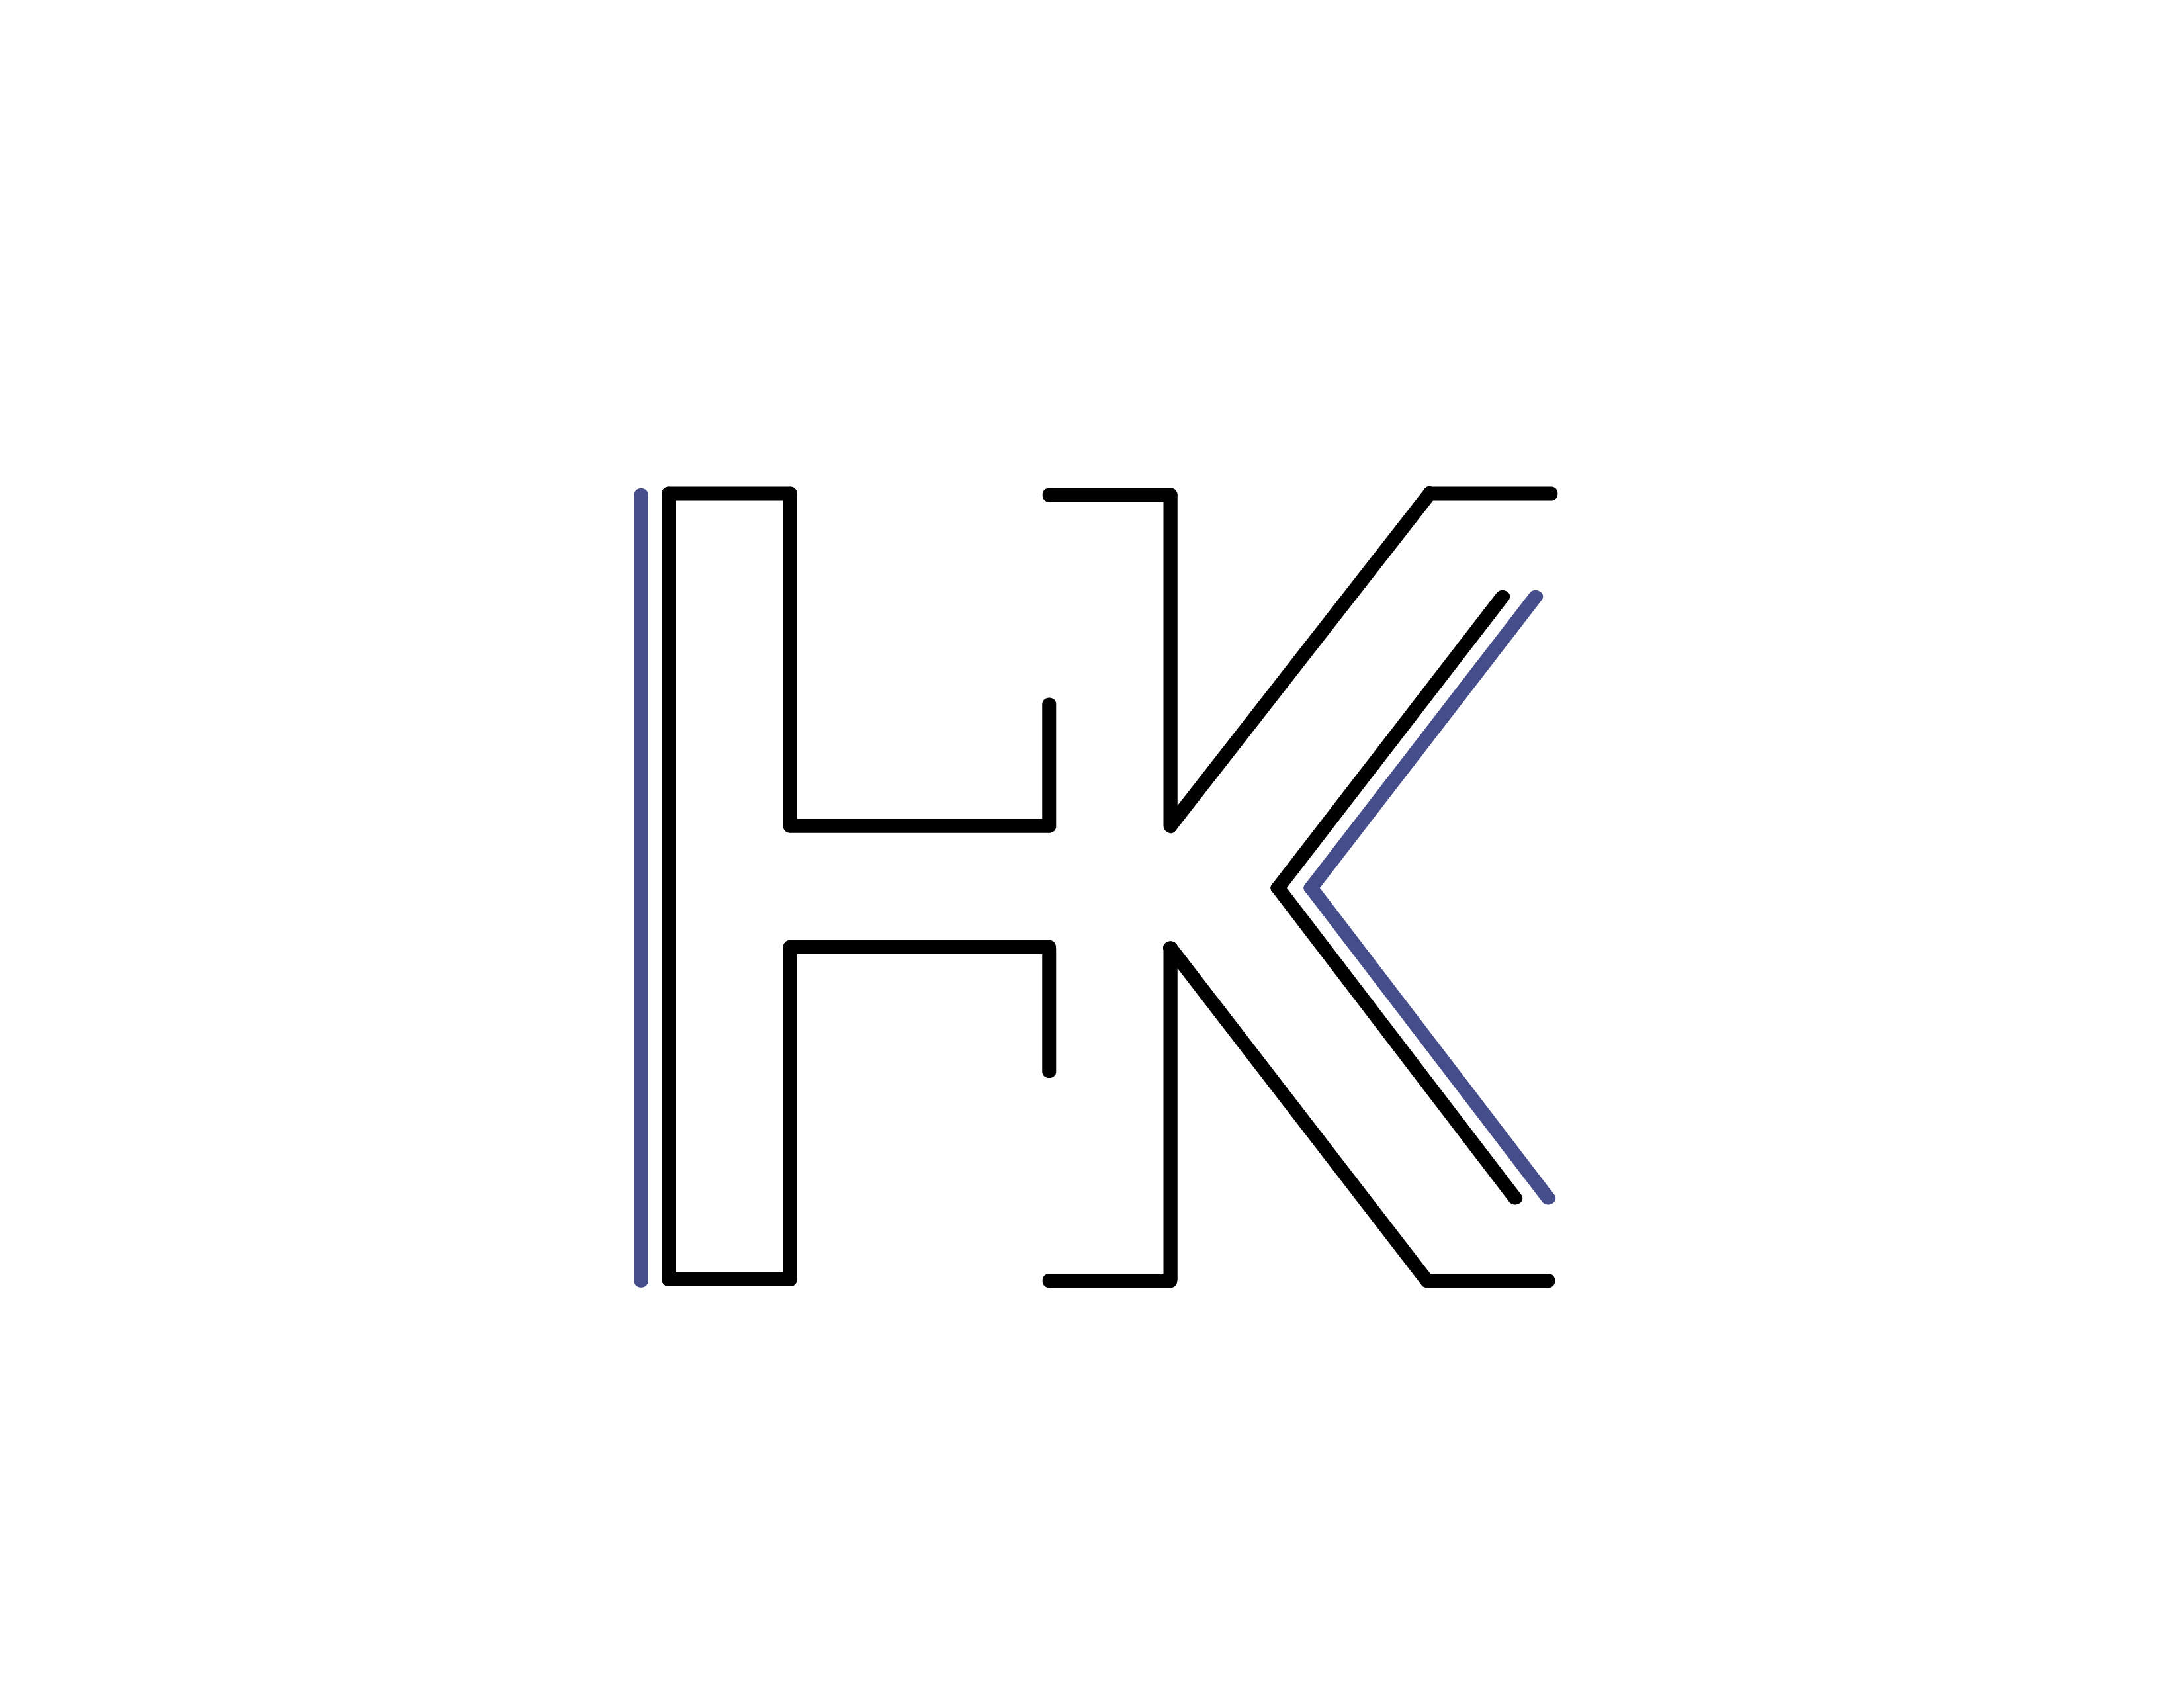 hkitch design